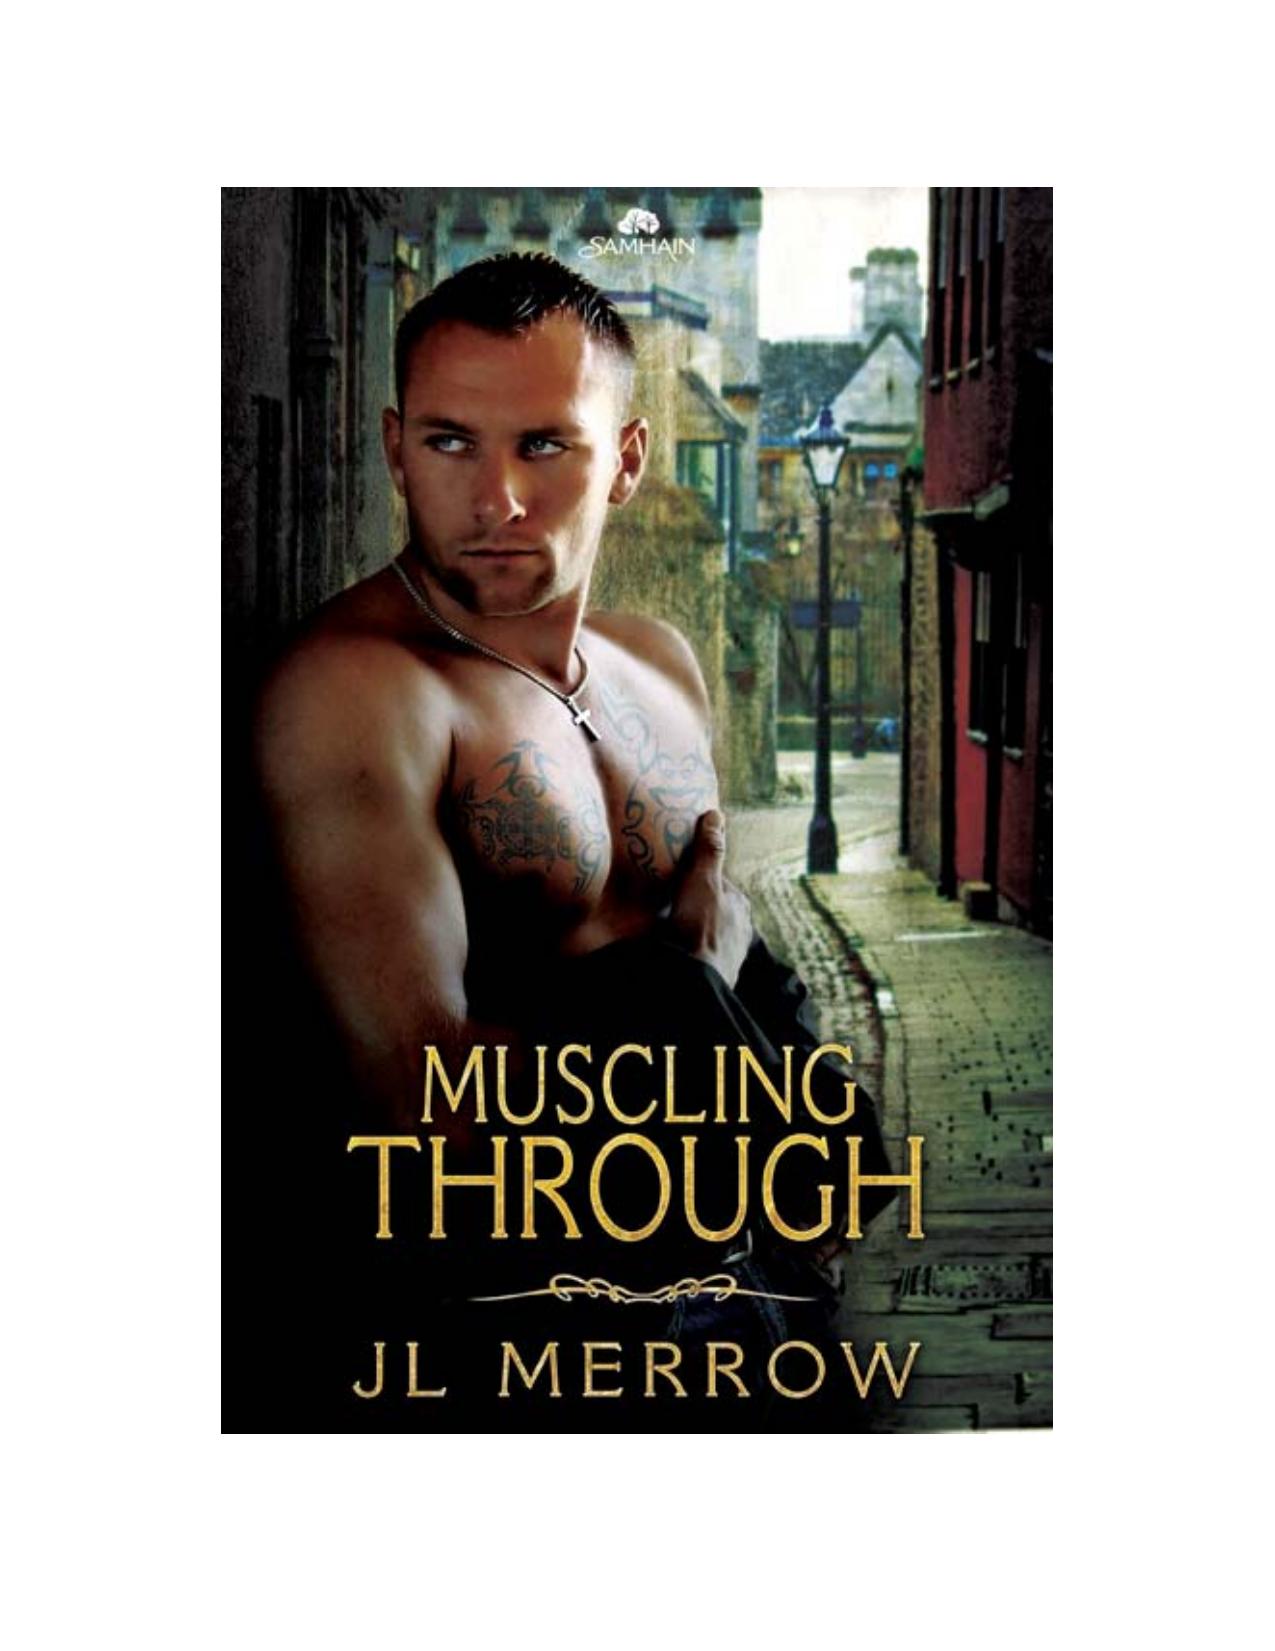 Muscling Through by JL Merrow